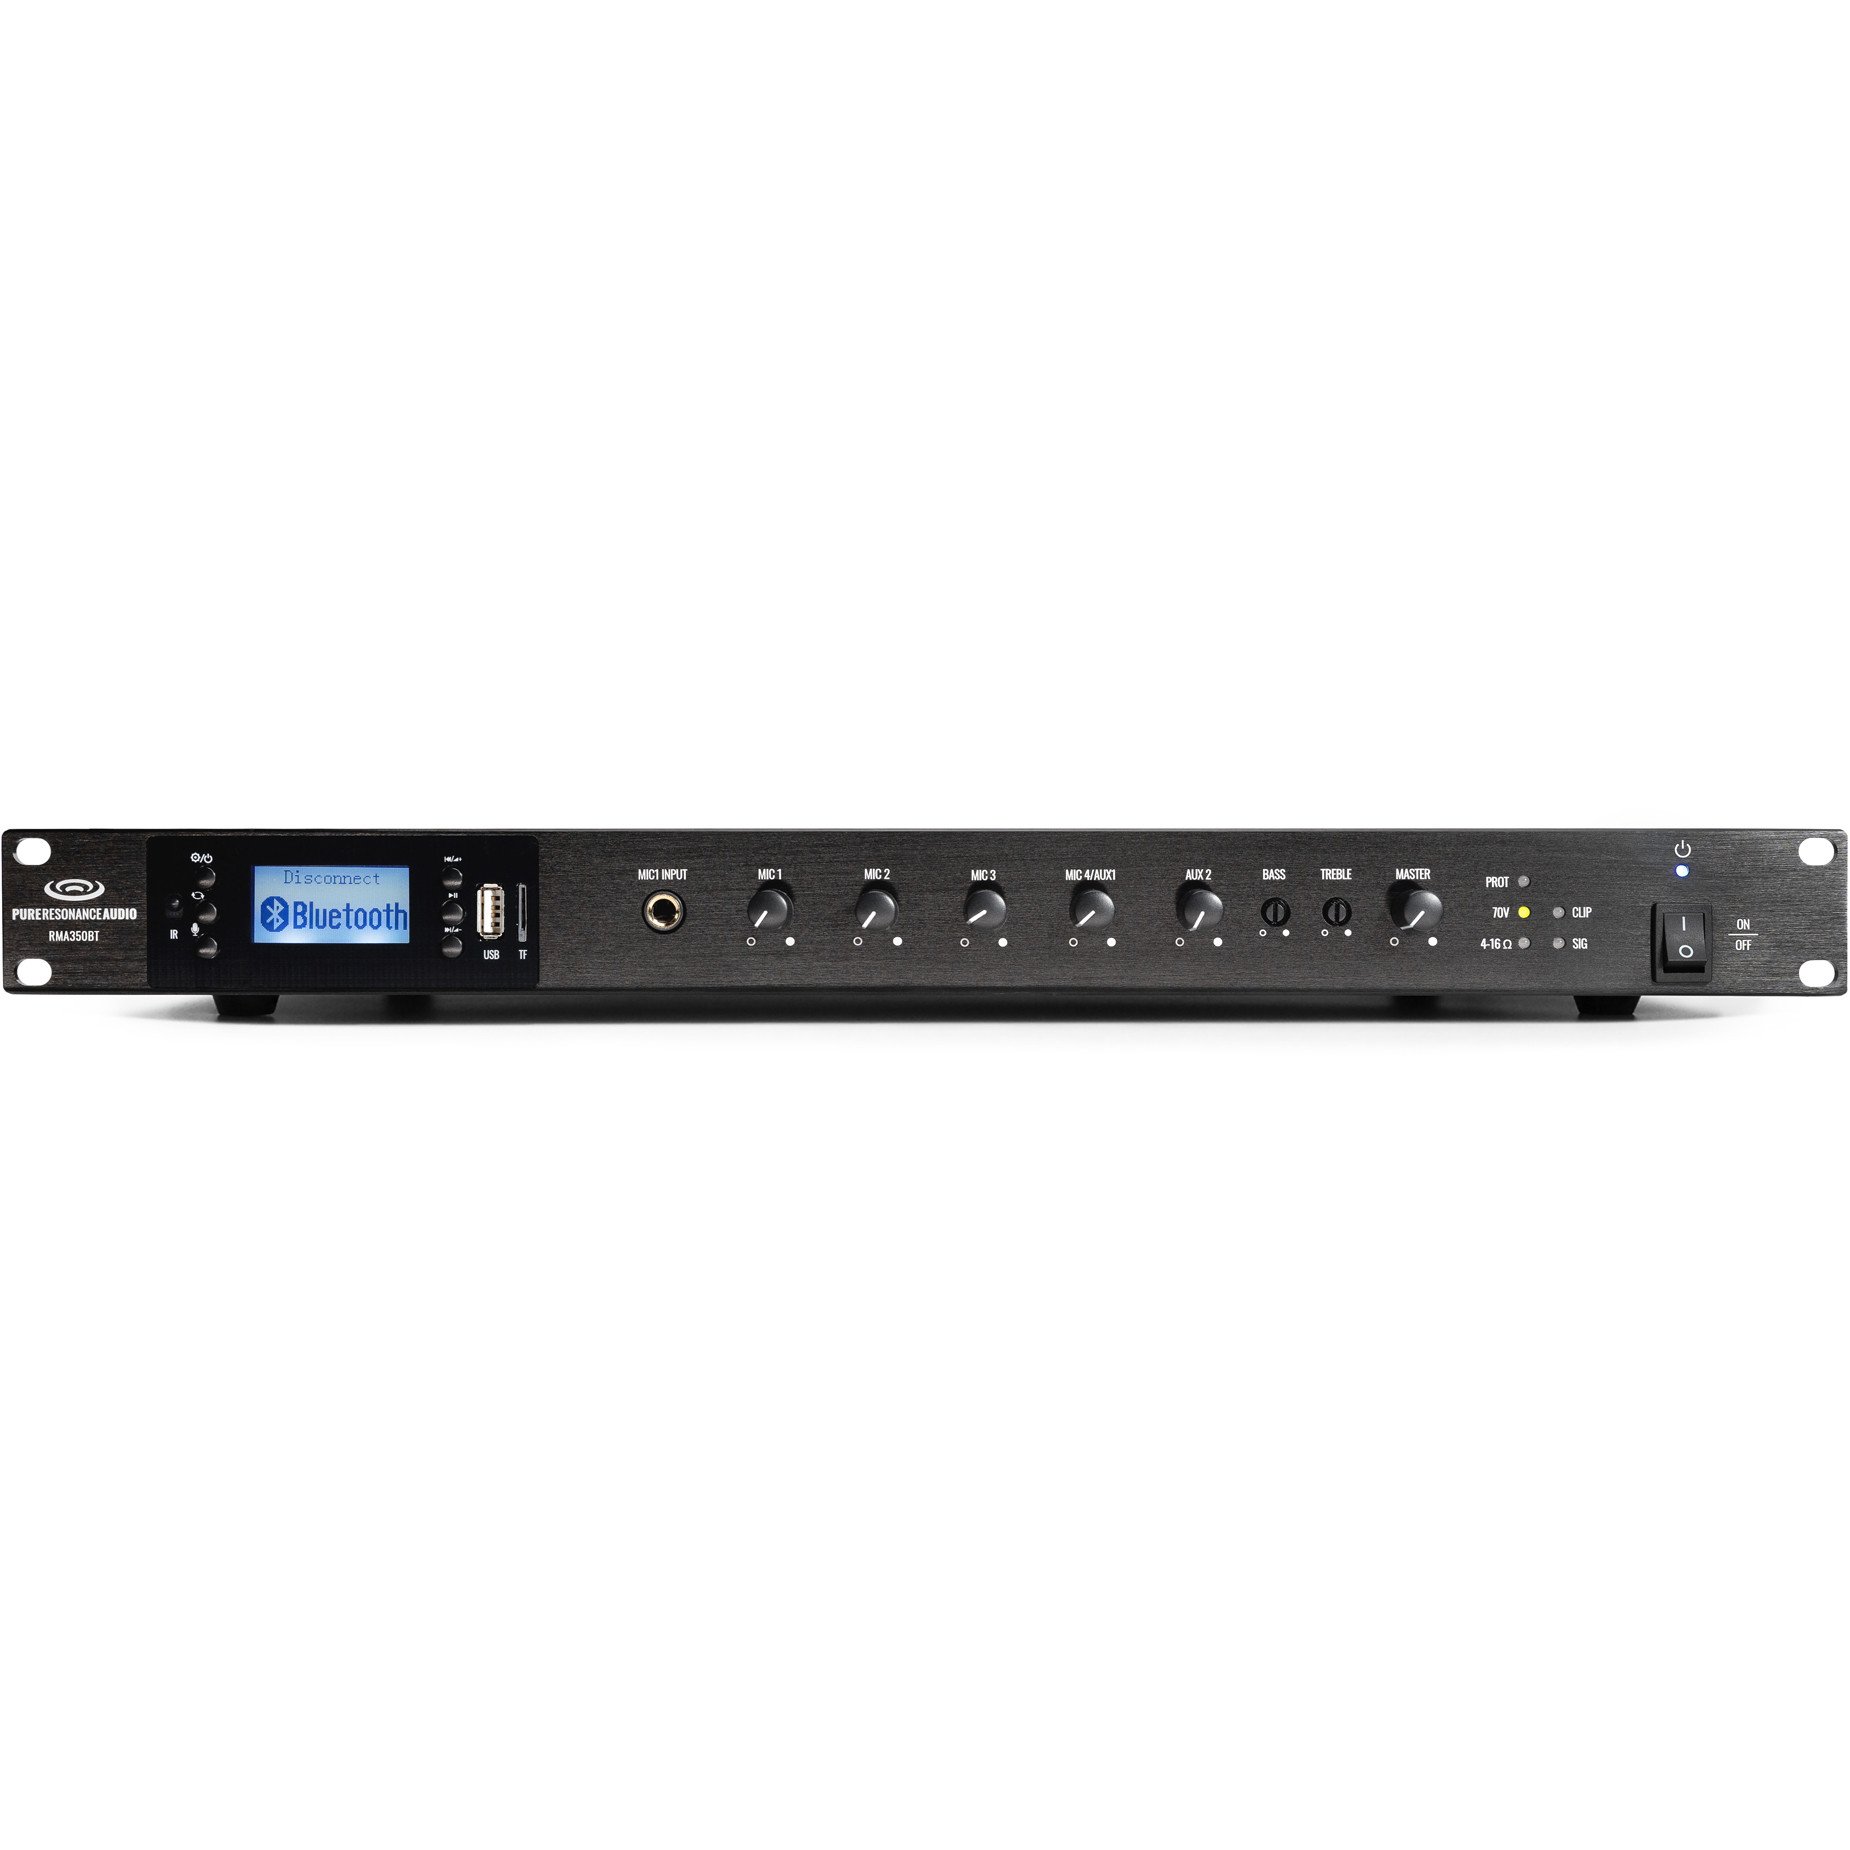 Pure Resonance Audio RMA350BT Mixer Amplifier